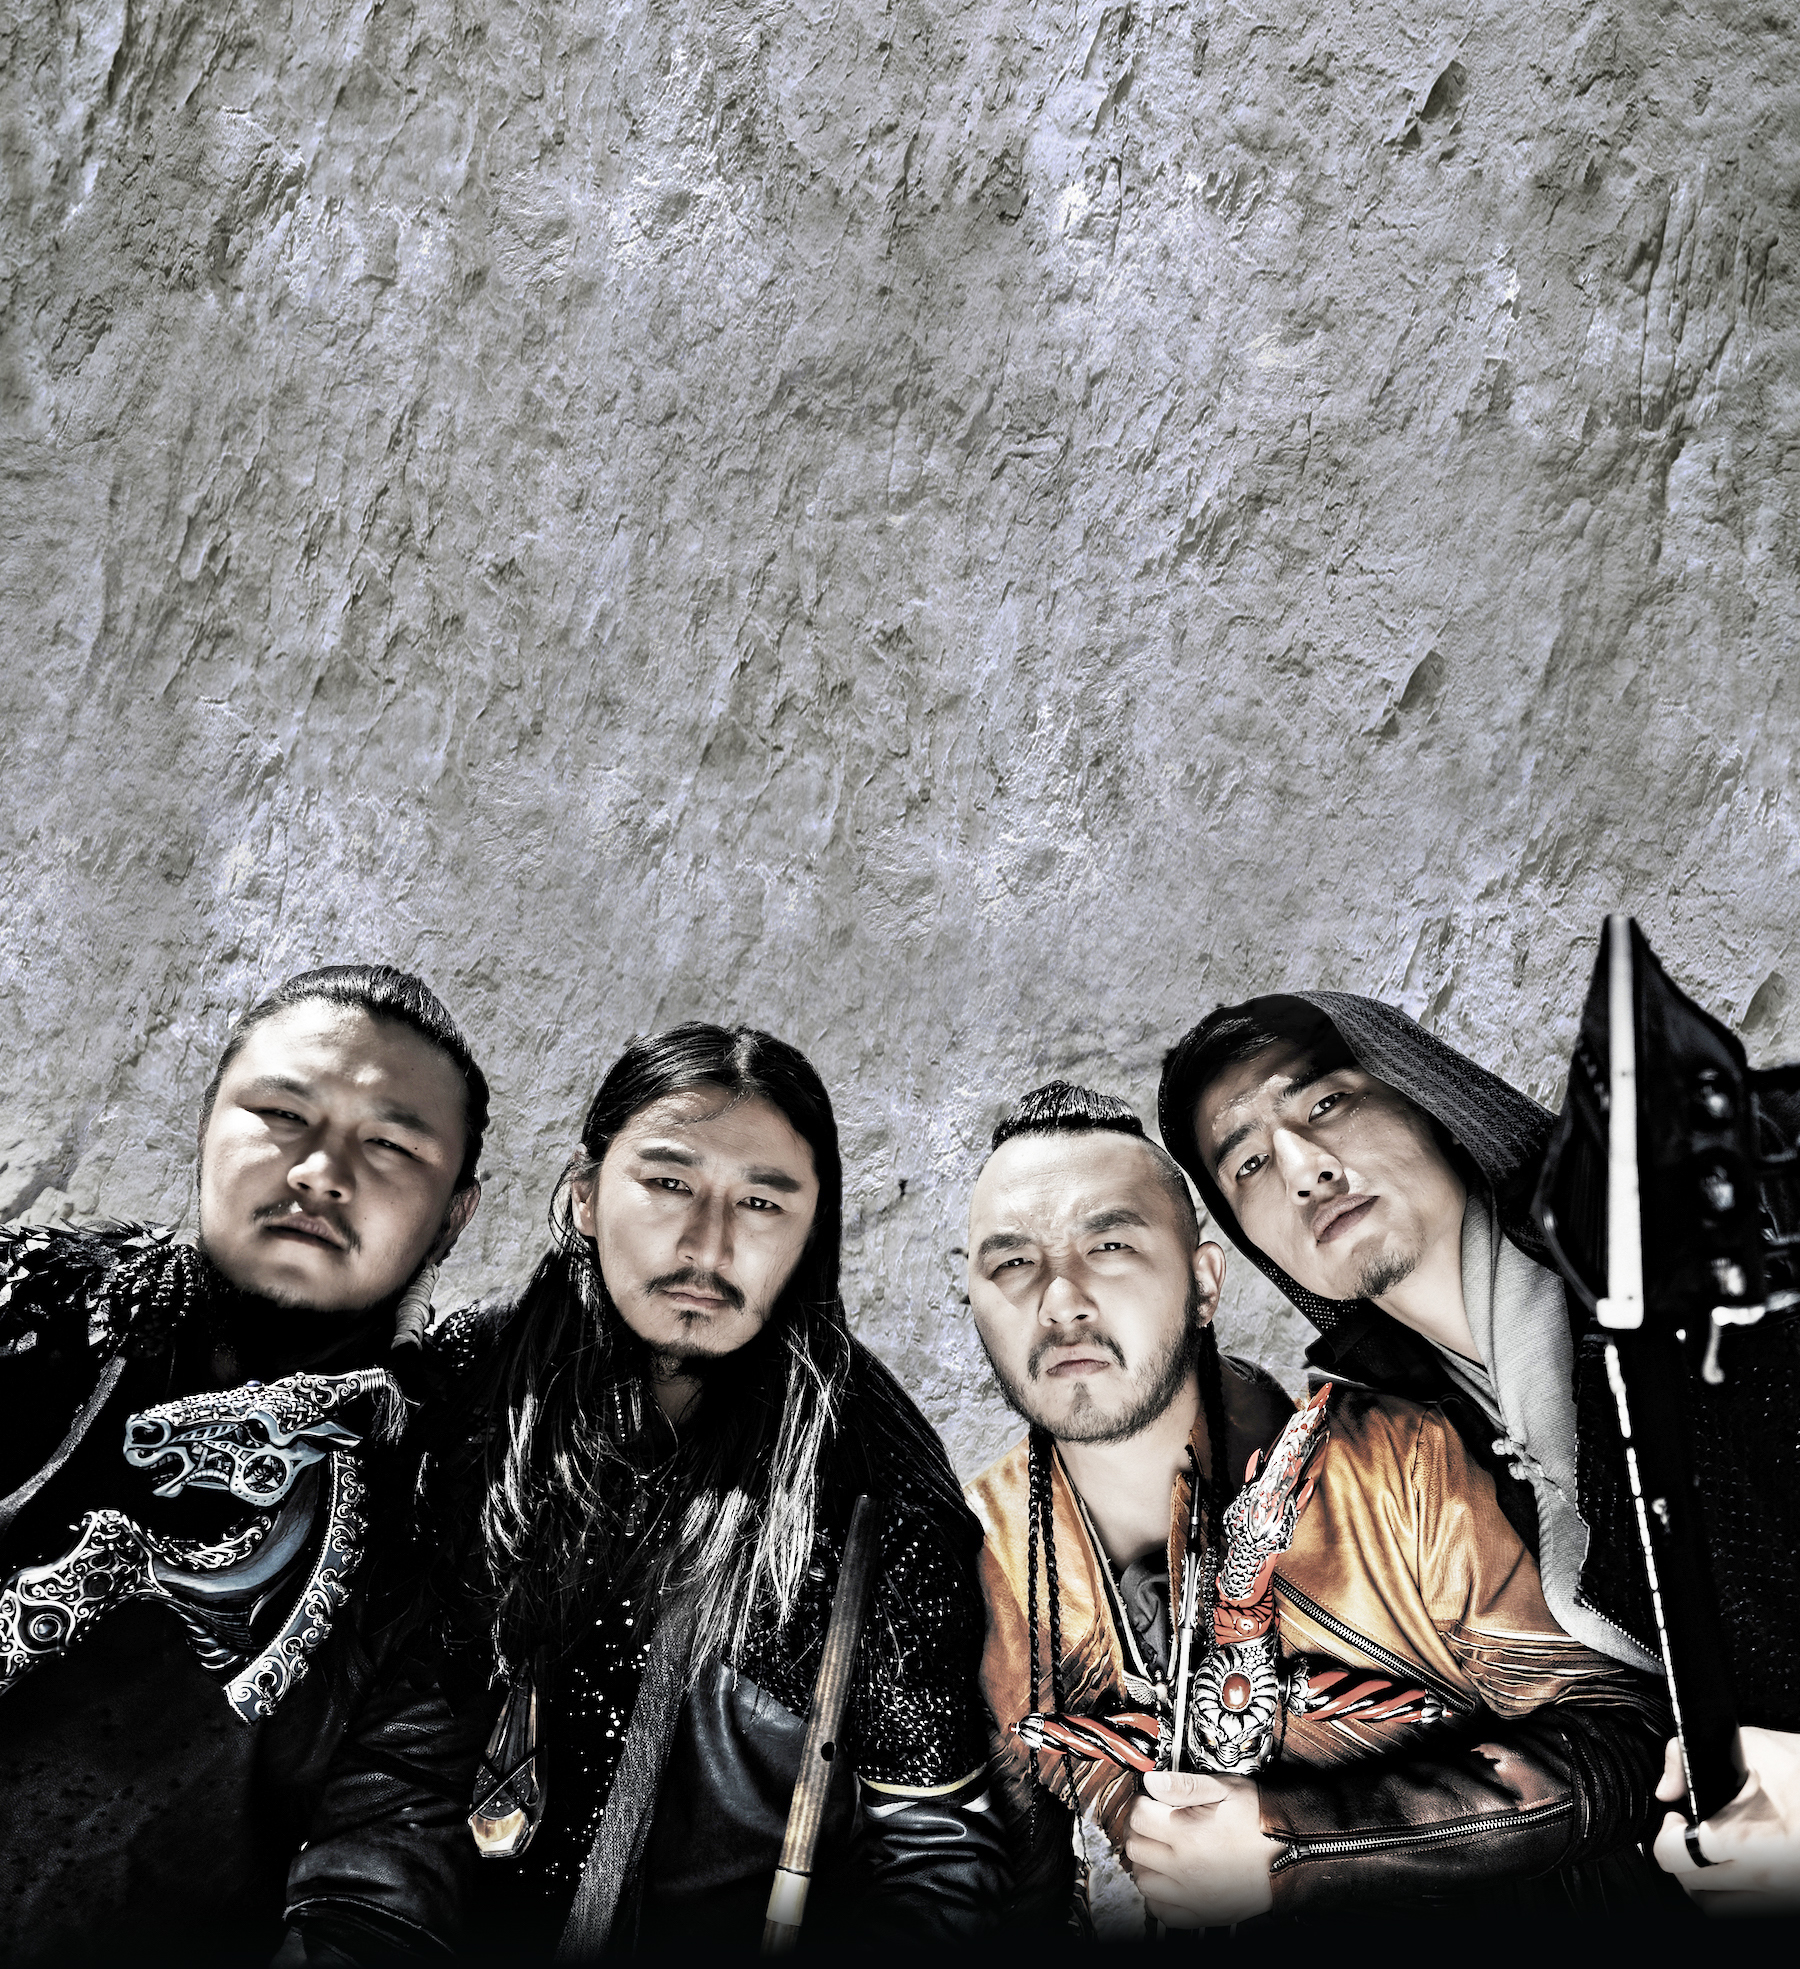 Vorbericht: The HU – Mongolische Tradition trifft Heavy Metal 2020 auf Tour im Januar/Februar